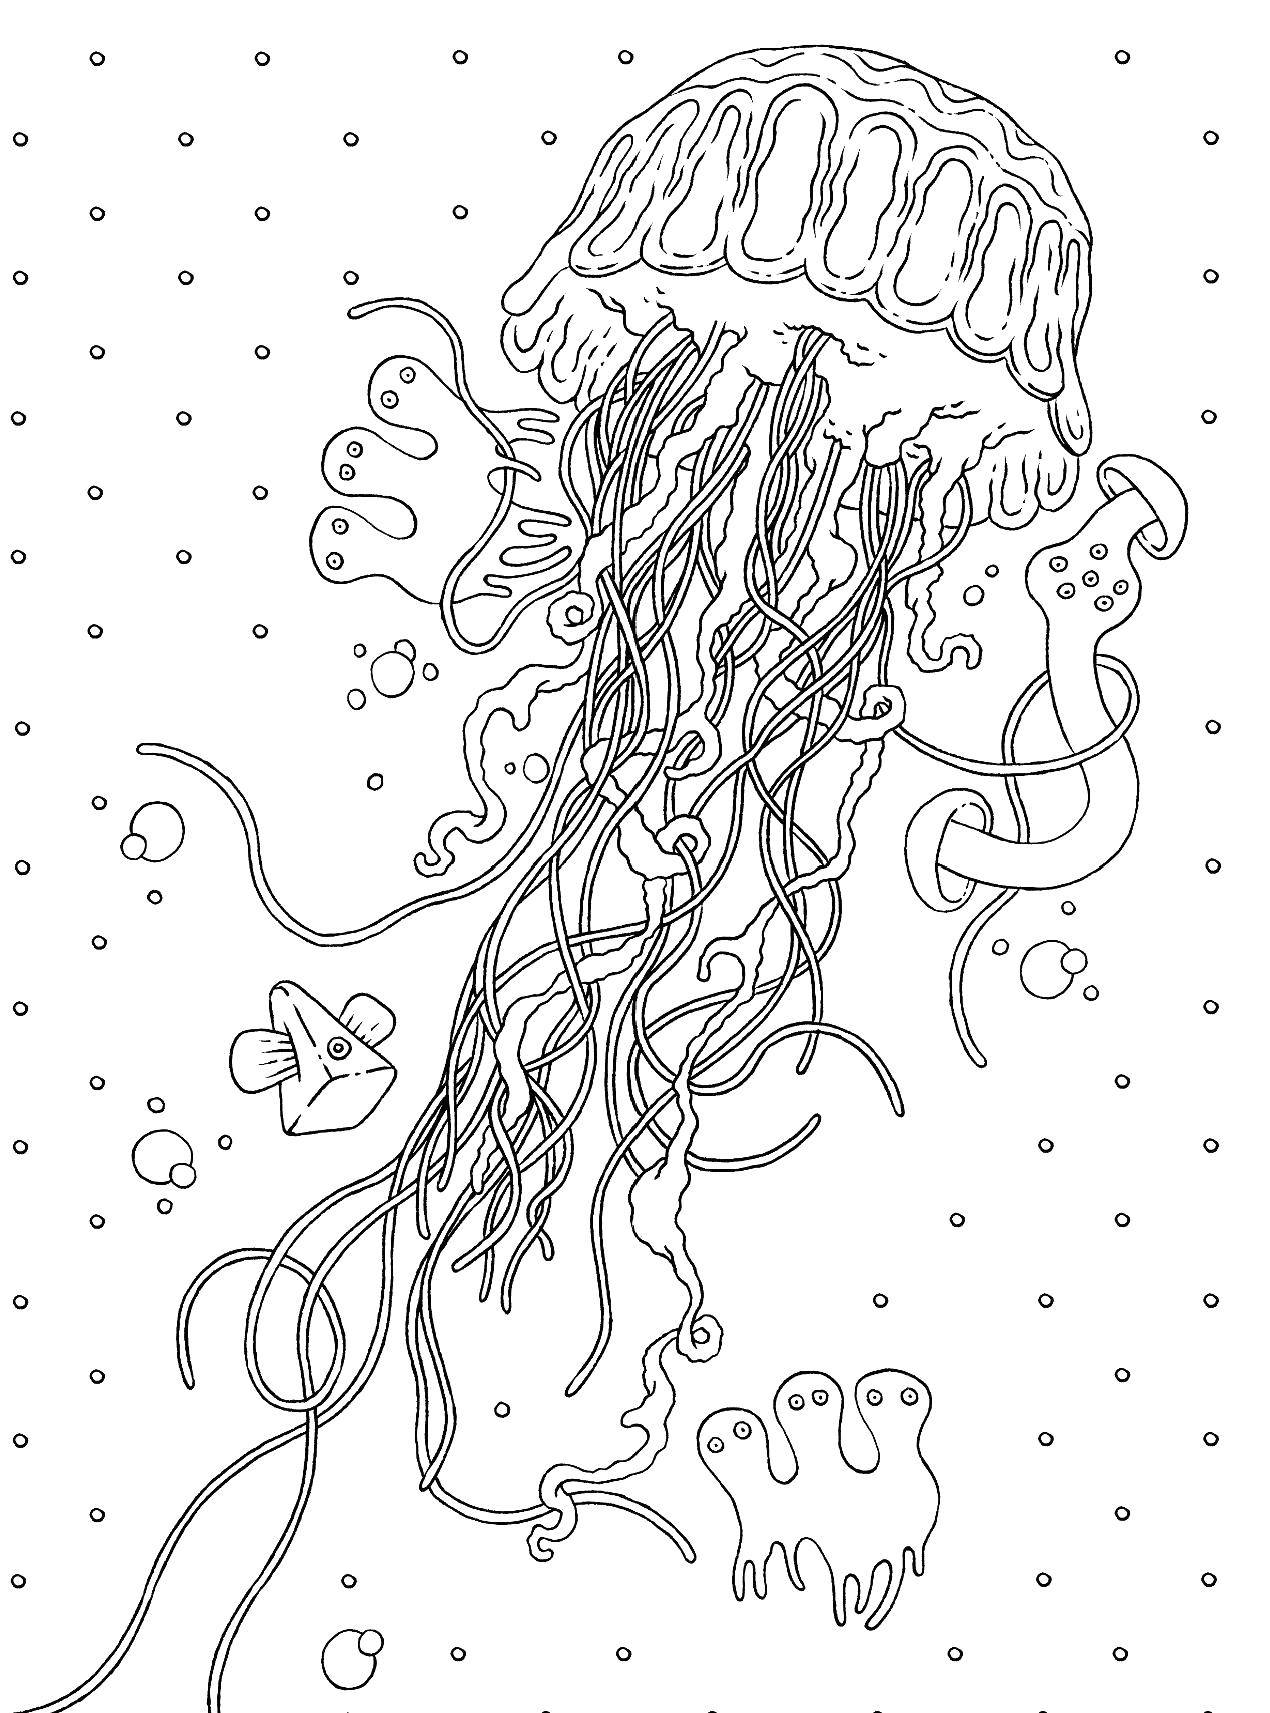 Название: Раскраска Гигантская медуза. Категория: медуза. Теги: Подводный мир, медуза.